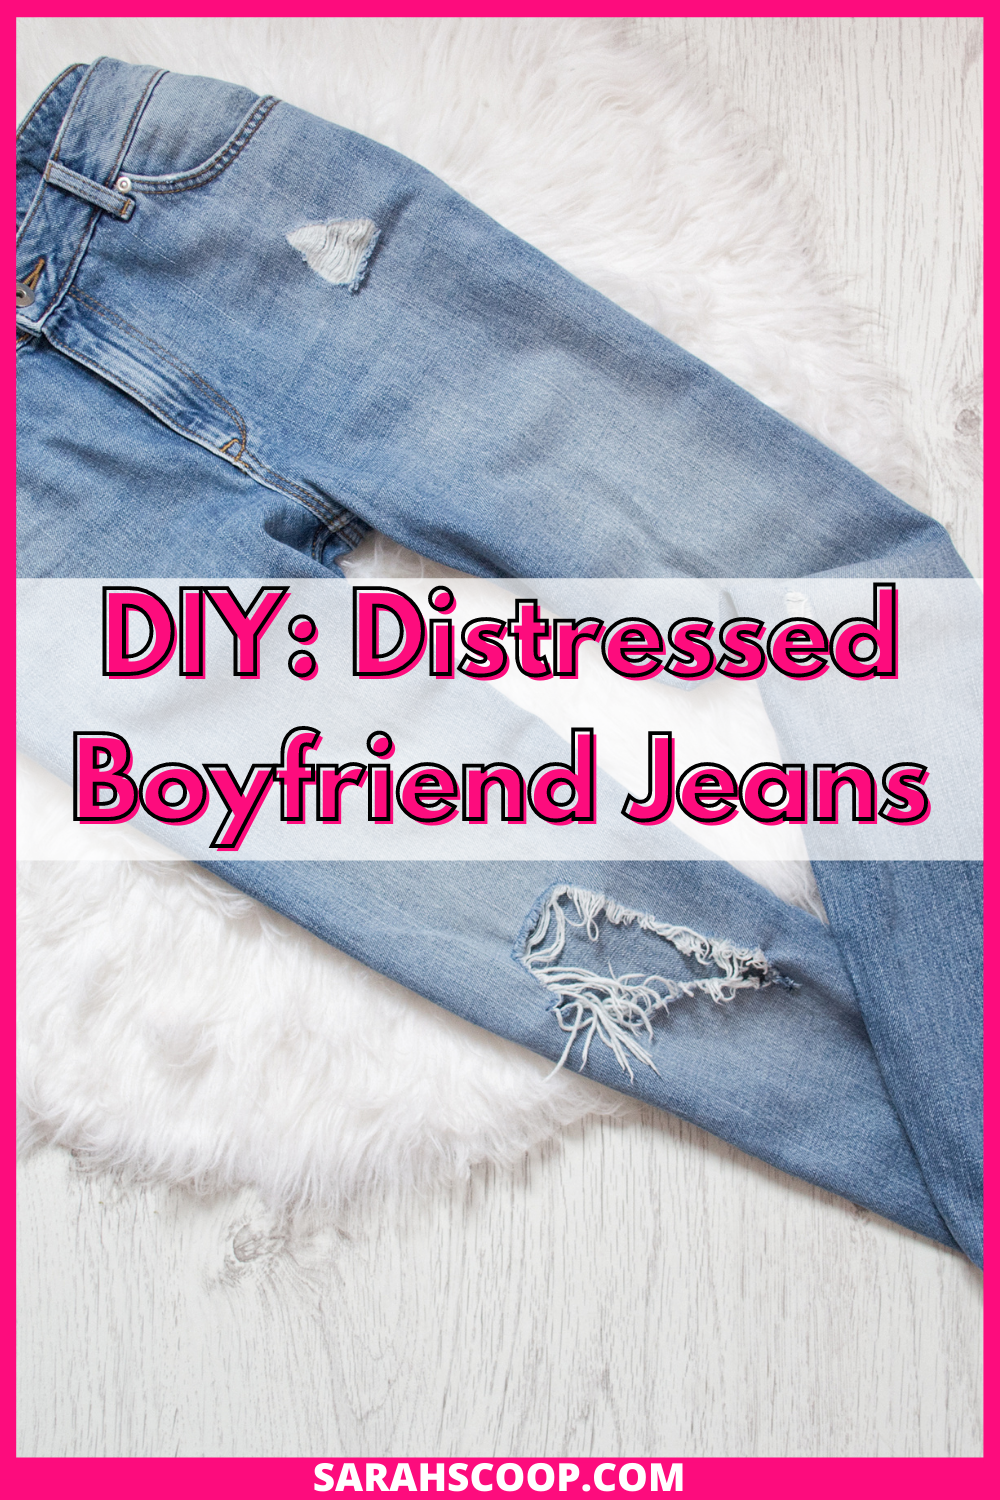 DIY distressed jeans.